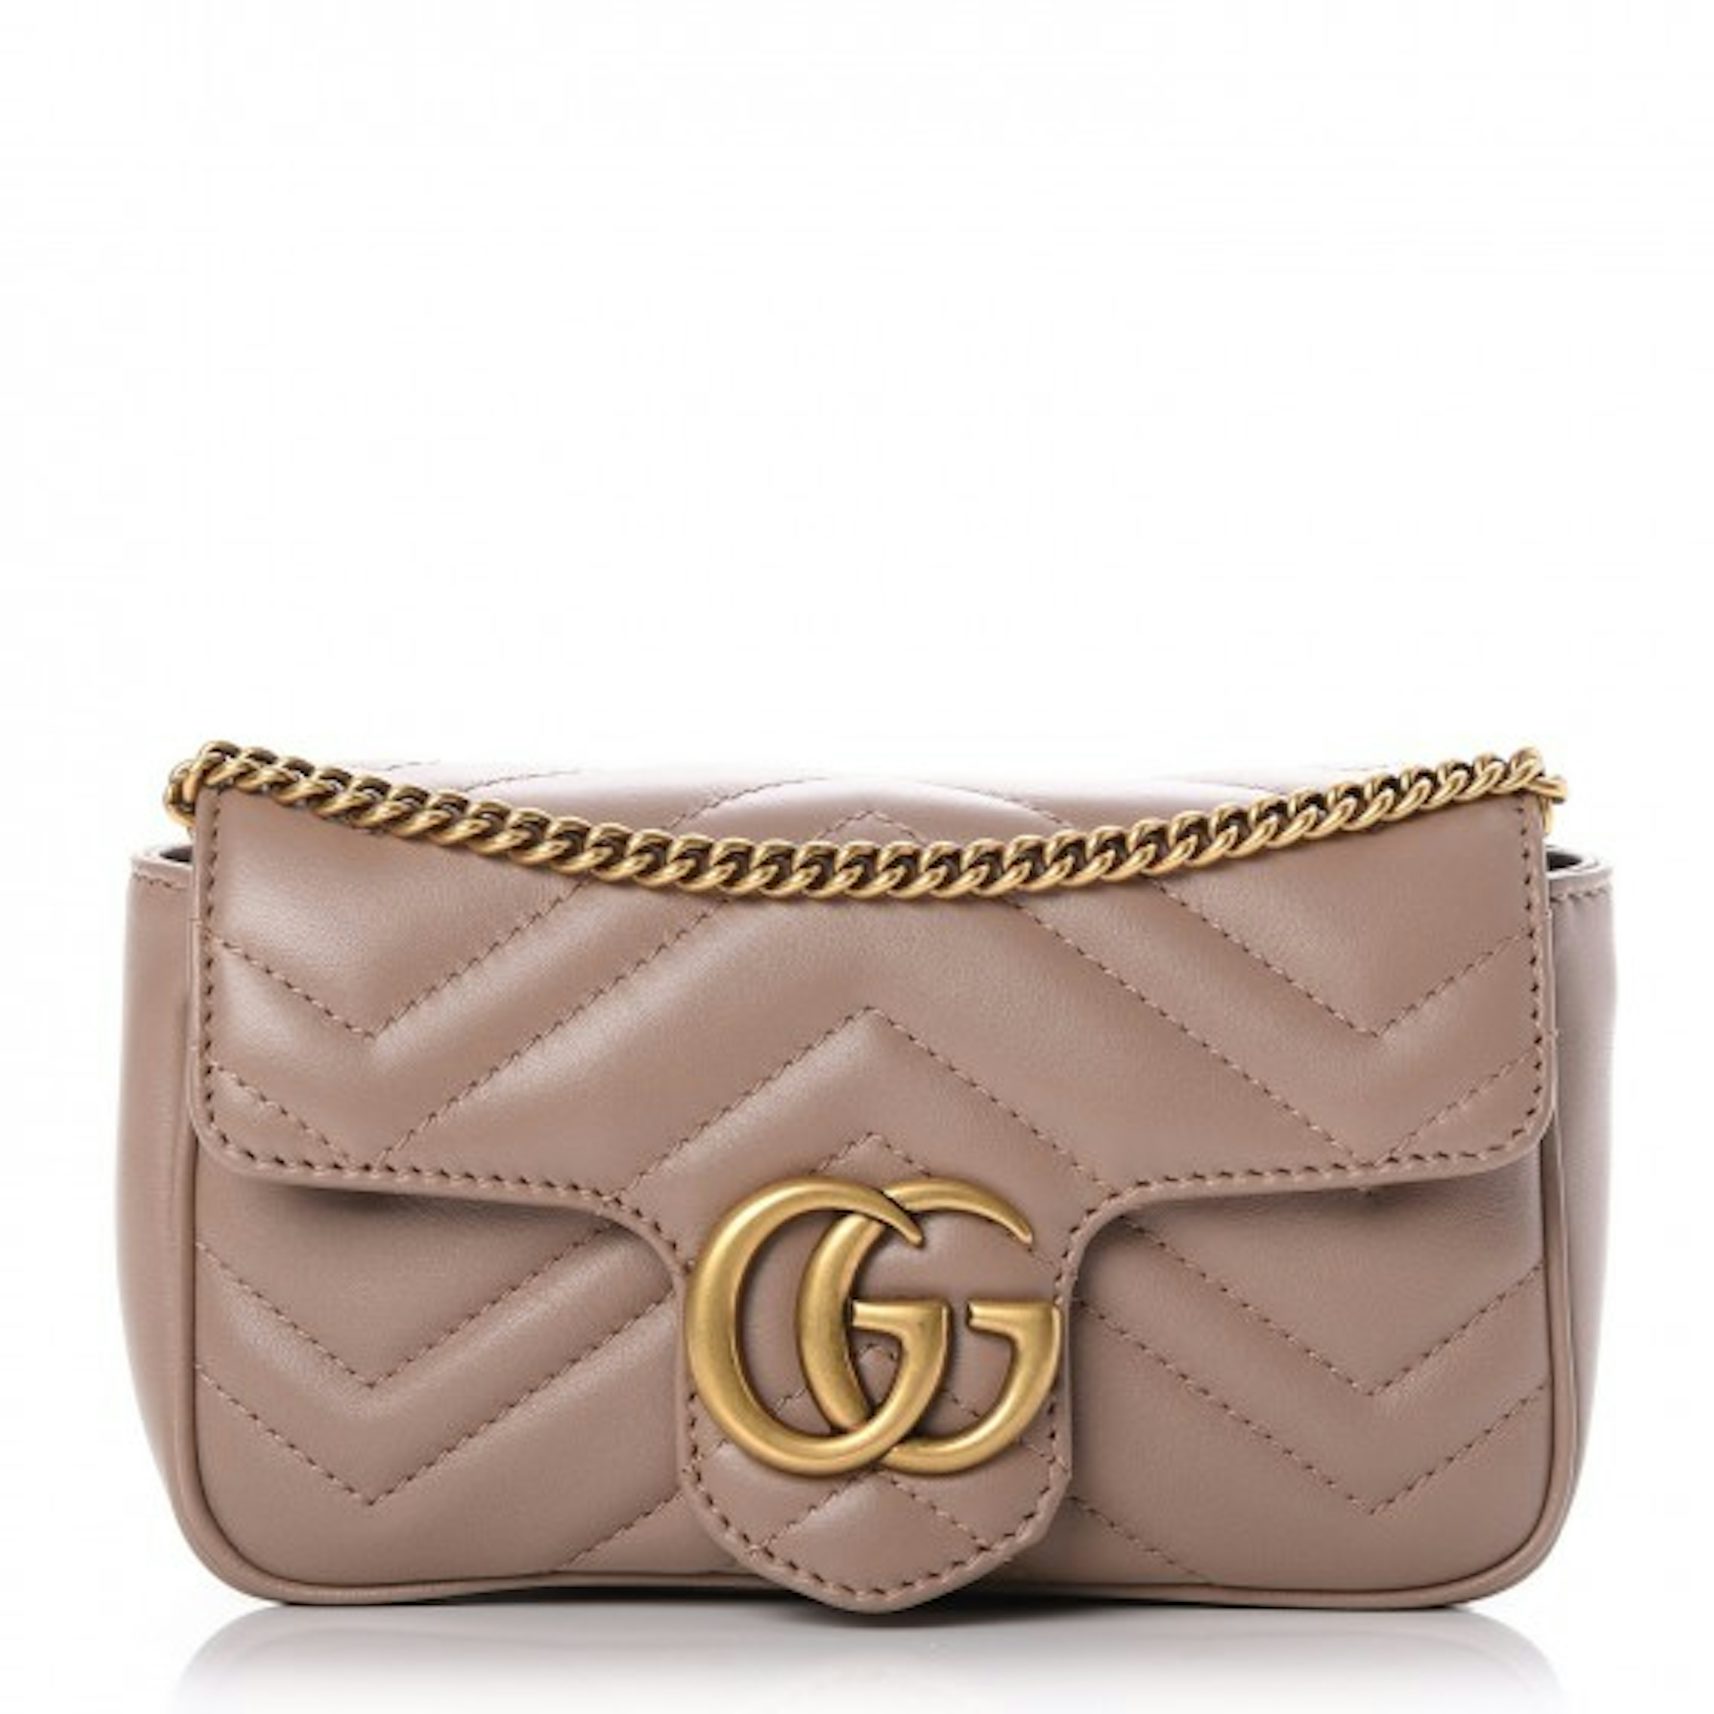  Gucci Marmont Bag